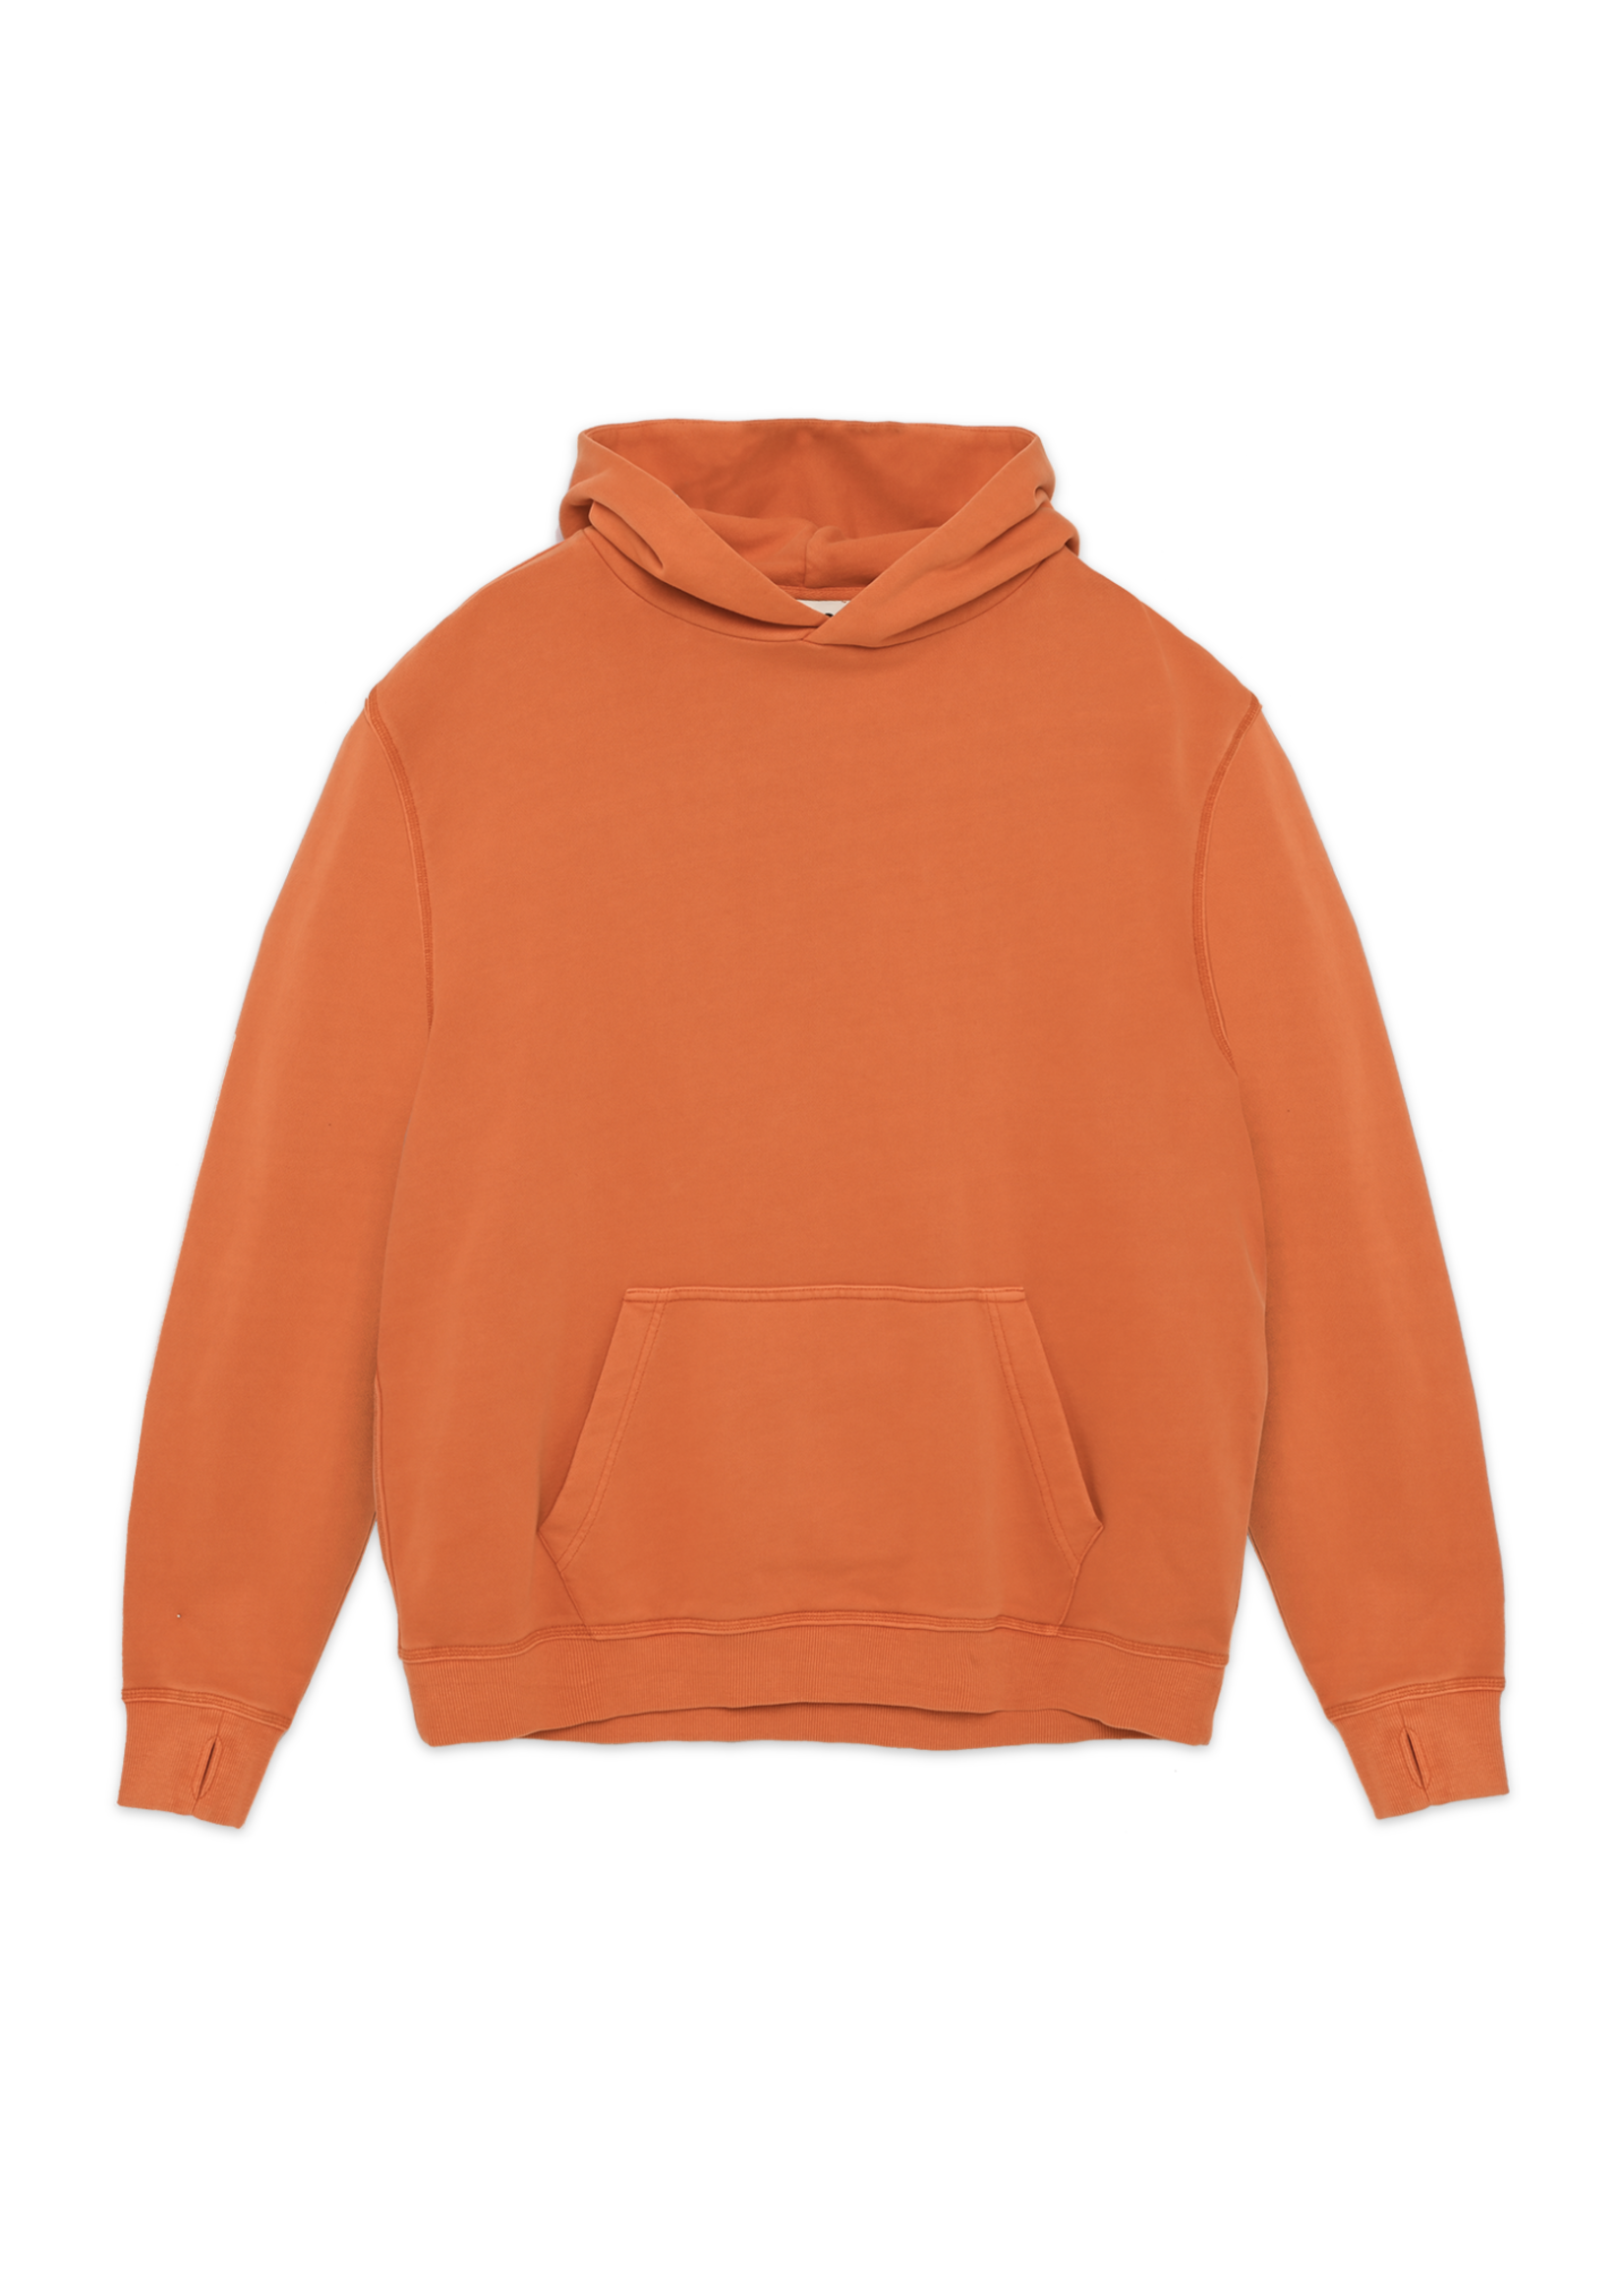 YMC Trugoy Cotton Loopback Hooded Sweatshirt in Orange